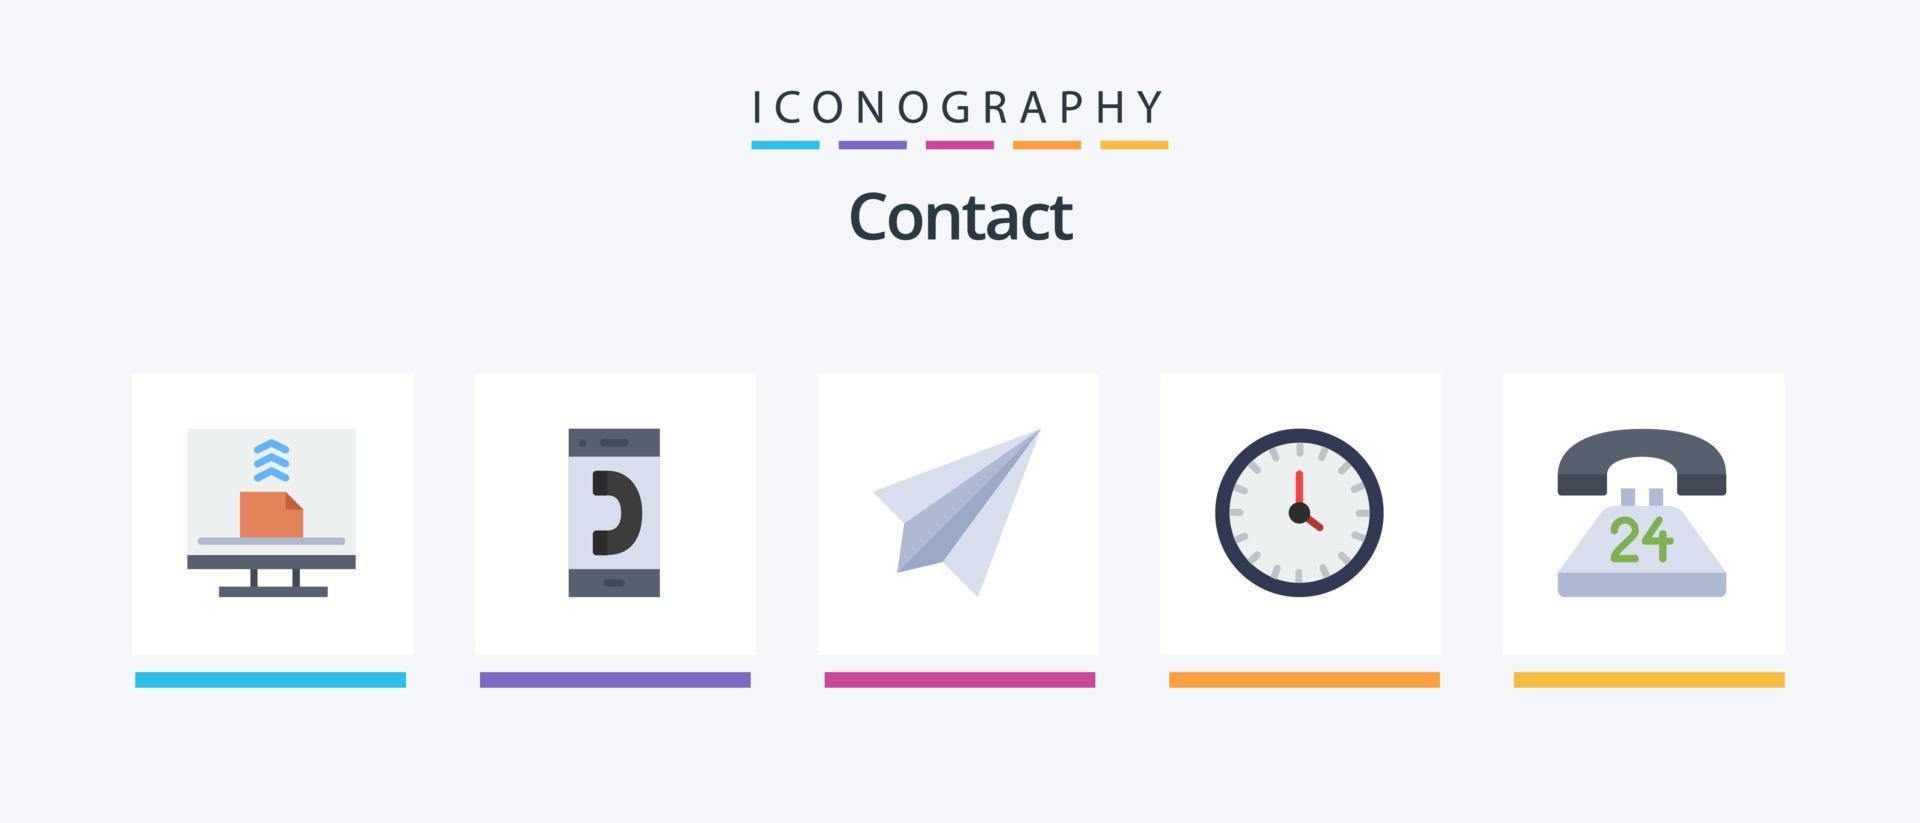 Kontakt platt 5 ikon packa Inklusive Kontakt. ringa upp. konversation. skicka. Kontakt oss. kreativ ikoner design vektor